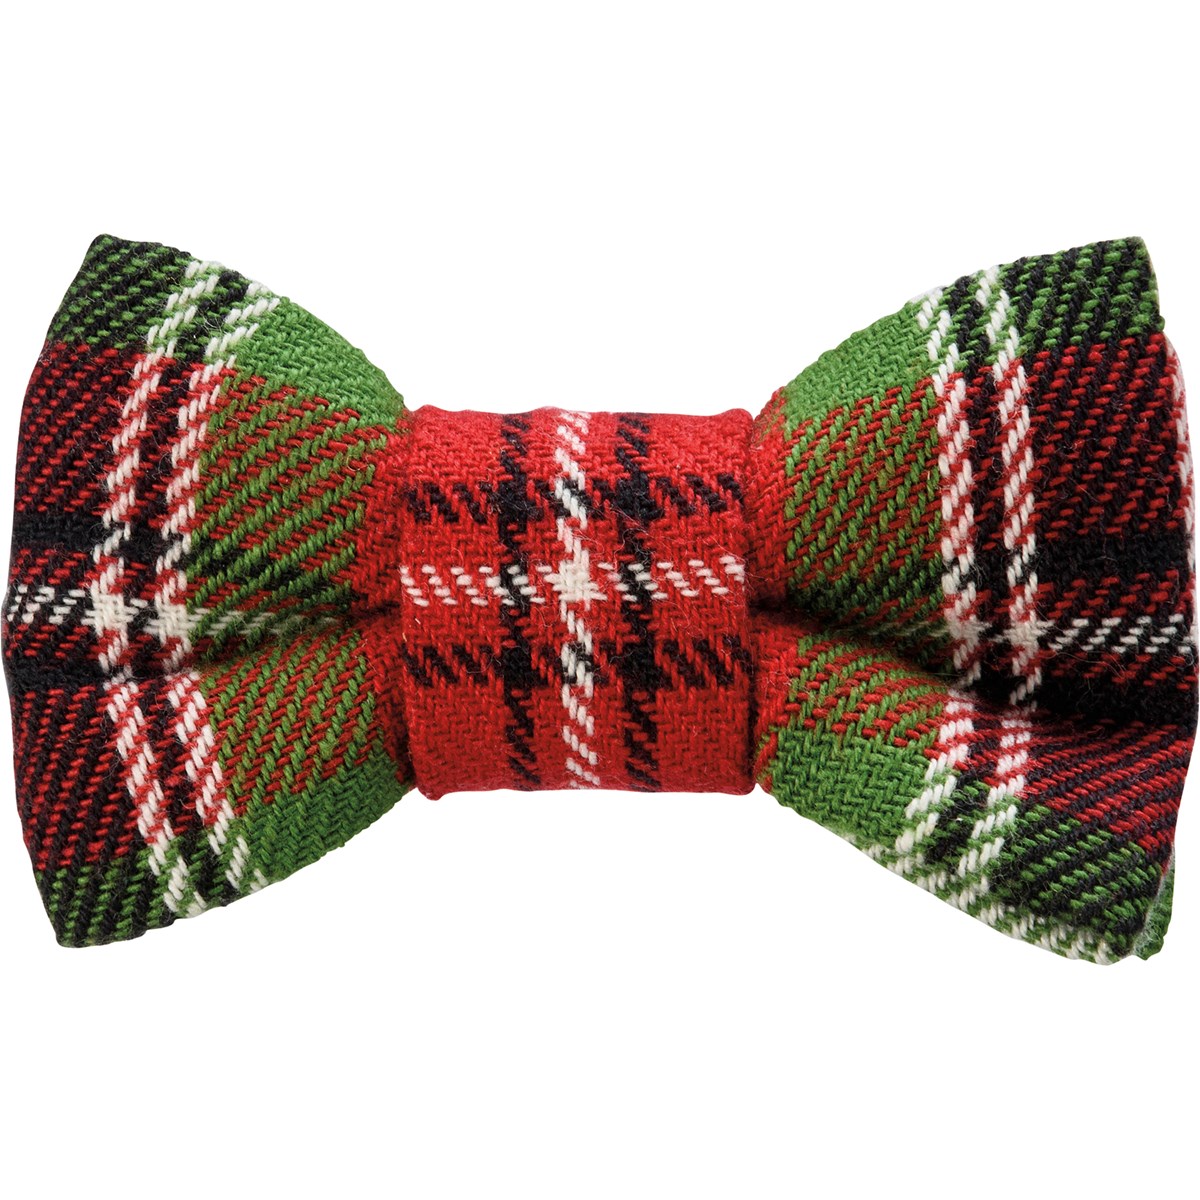 Christmas Plaid Medium Pet Bow Tie Set - Cotton, Hook-and-Loop Fastener